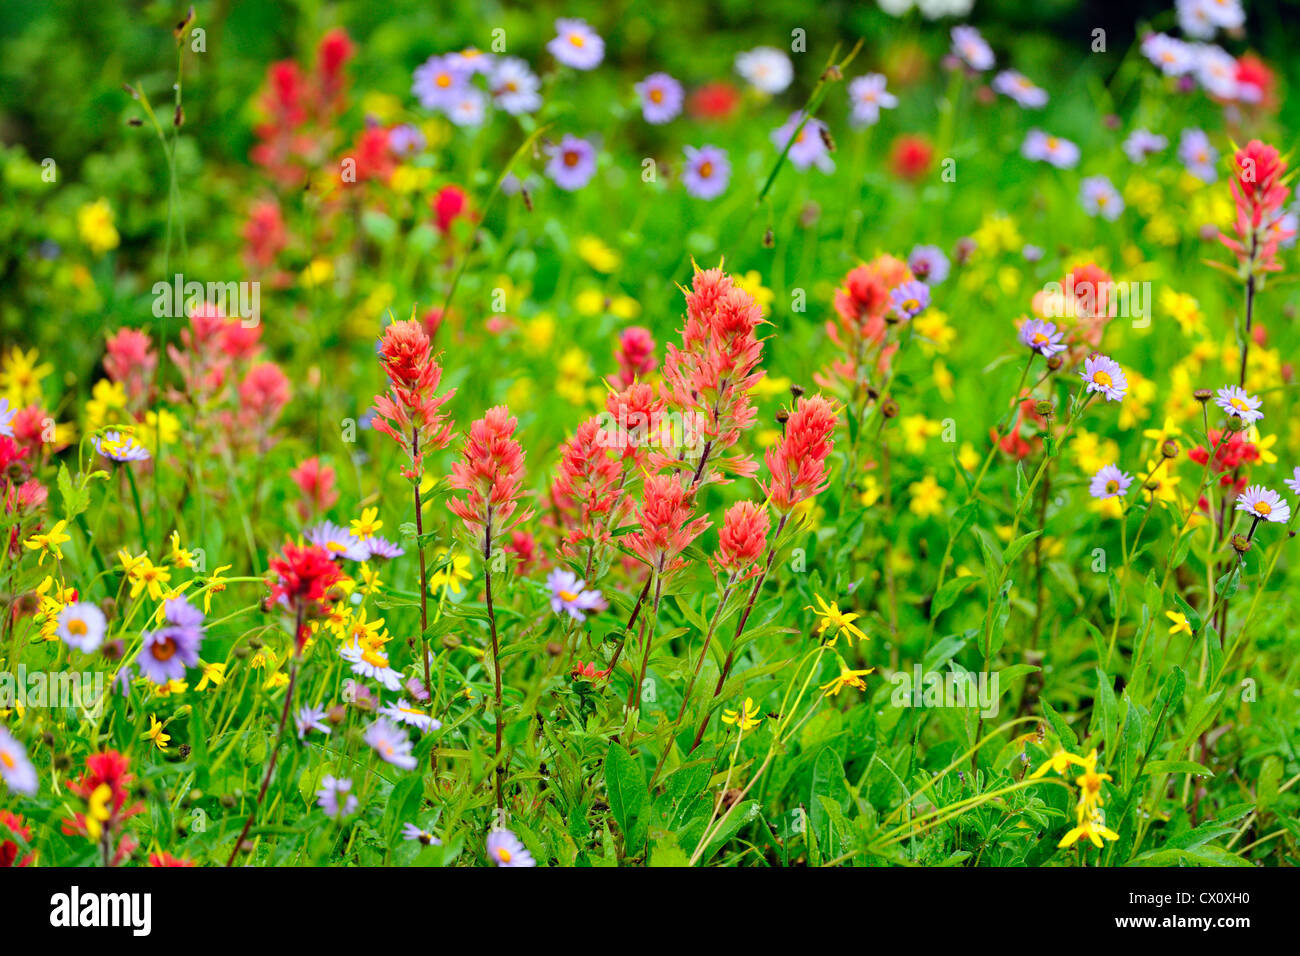 Alpine Meadows With Flowers In Bloom Mount Revelstoke National Park